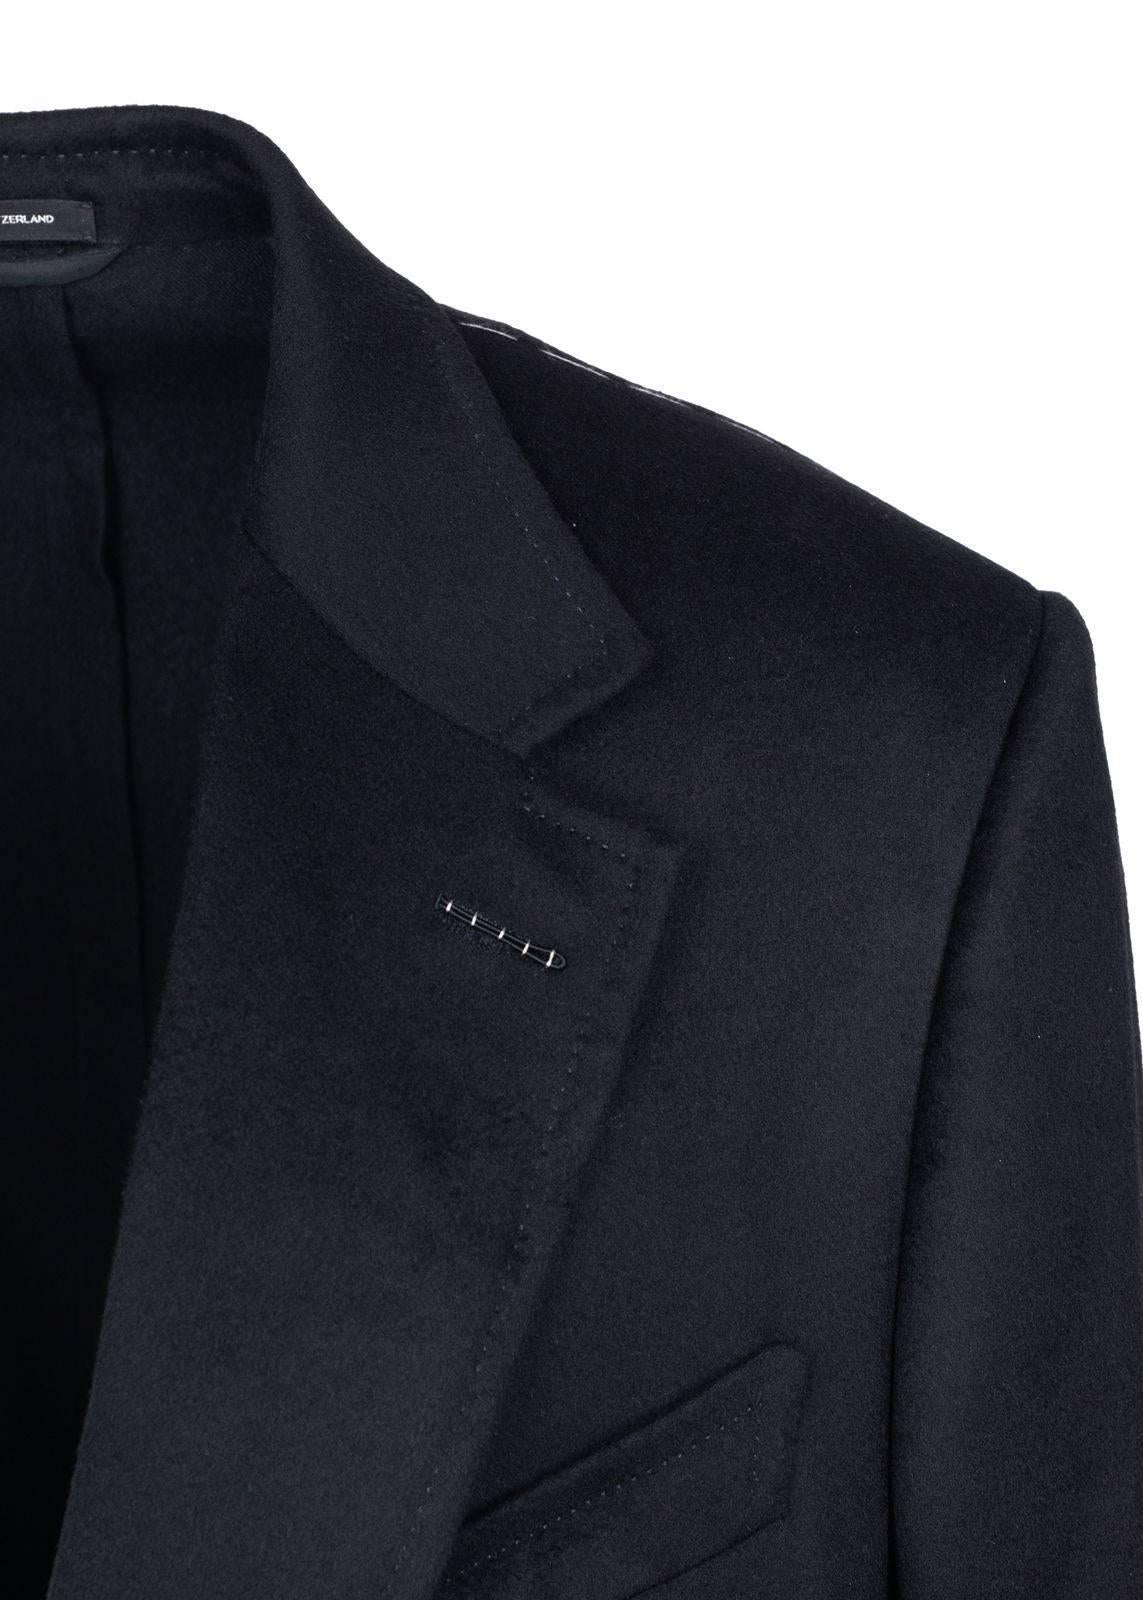 Tom Ford Black 100% Cashmere Shelton Cardigan Sports Jacket Sz 56L/46L RTL$3820 For Sale 1